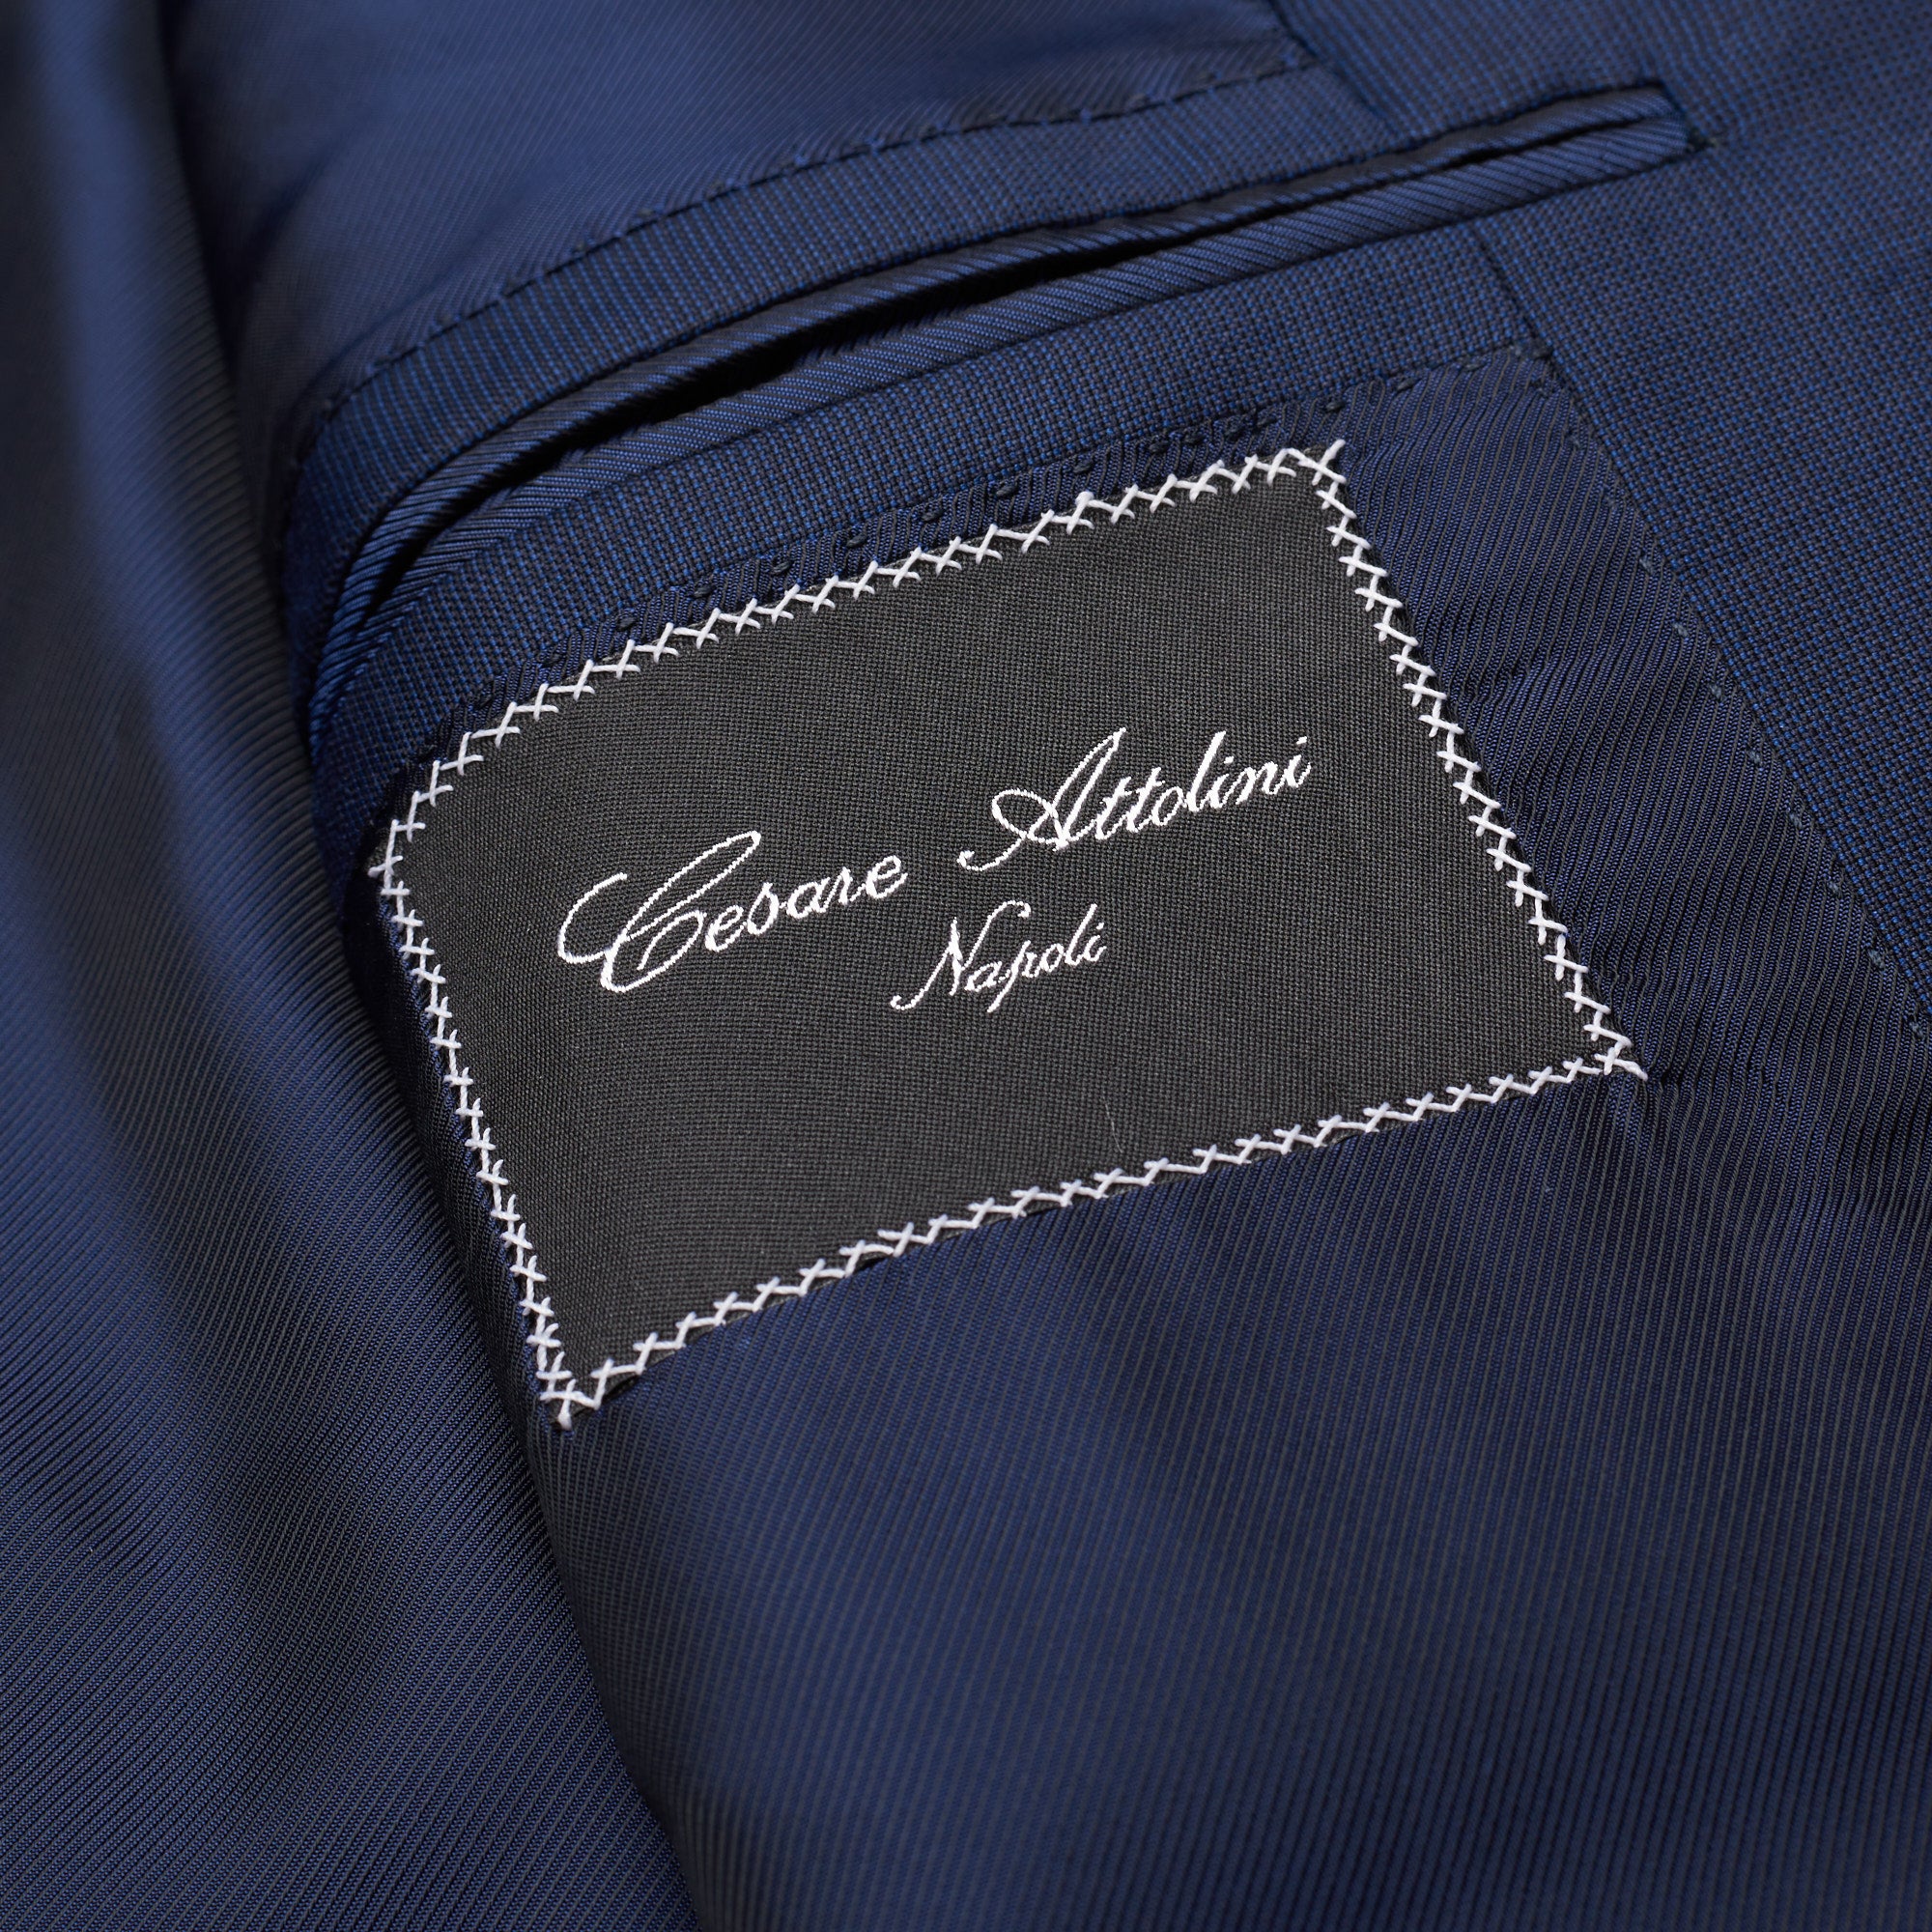 CESARE ATTOLINI Handmade Blue Nailhead Wool-Cashmere Suit 48 NEW US 38